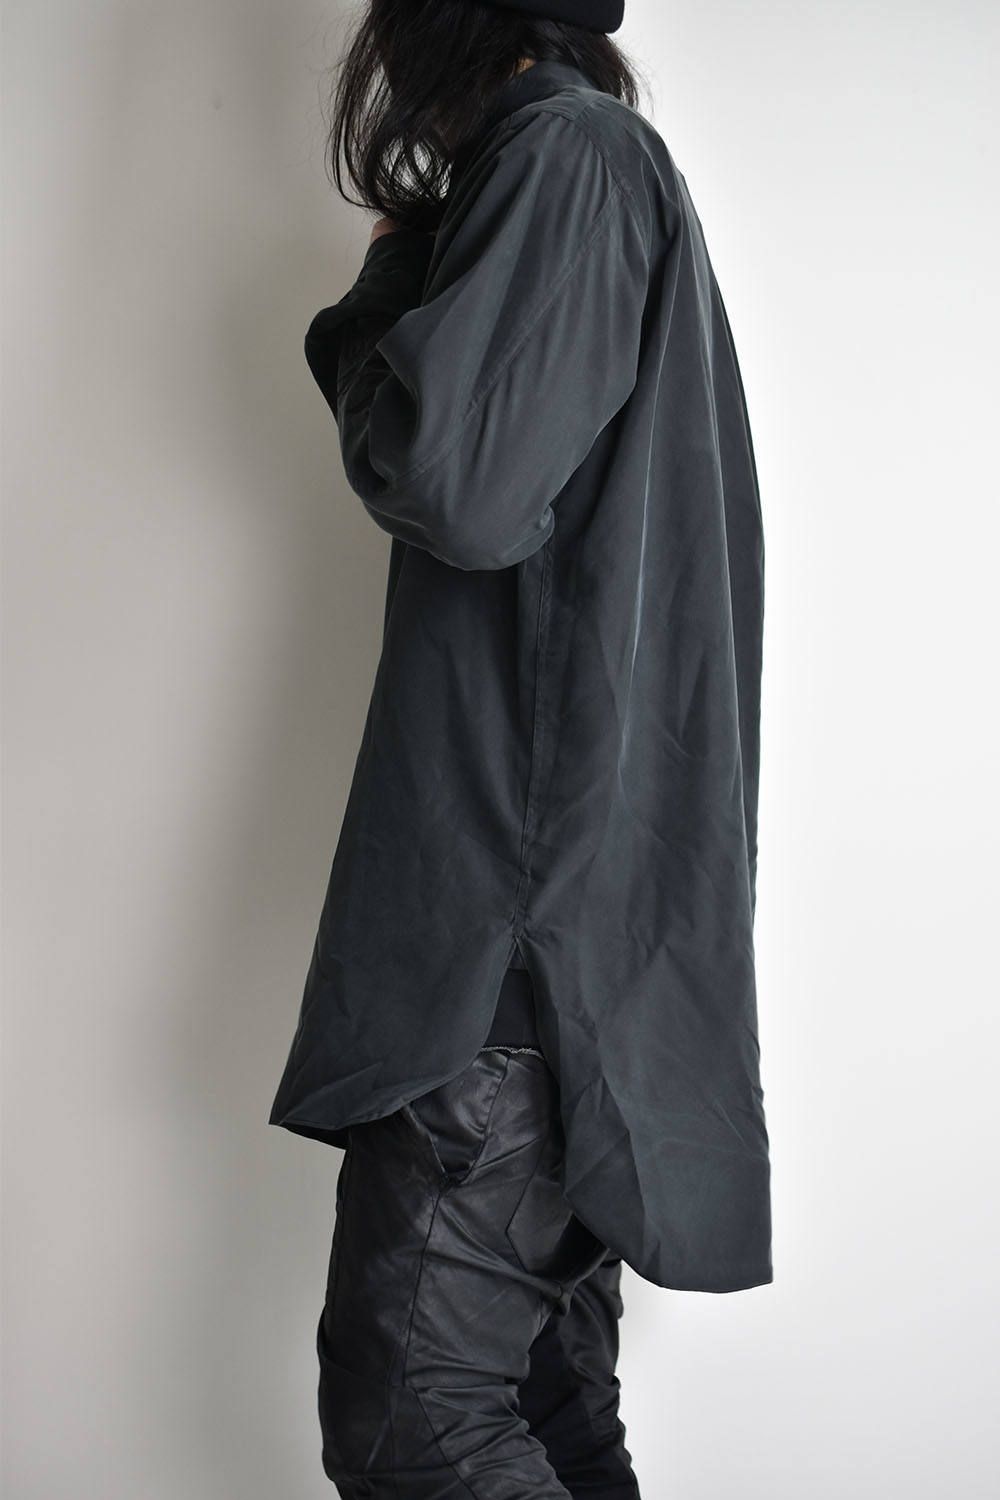 LONG SHT -embroidery-"Black"/刺繍ロングシャツ"ブラック"